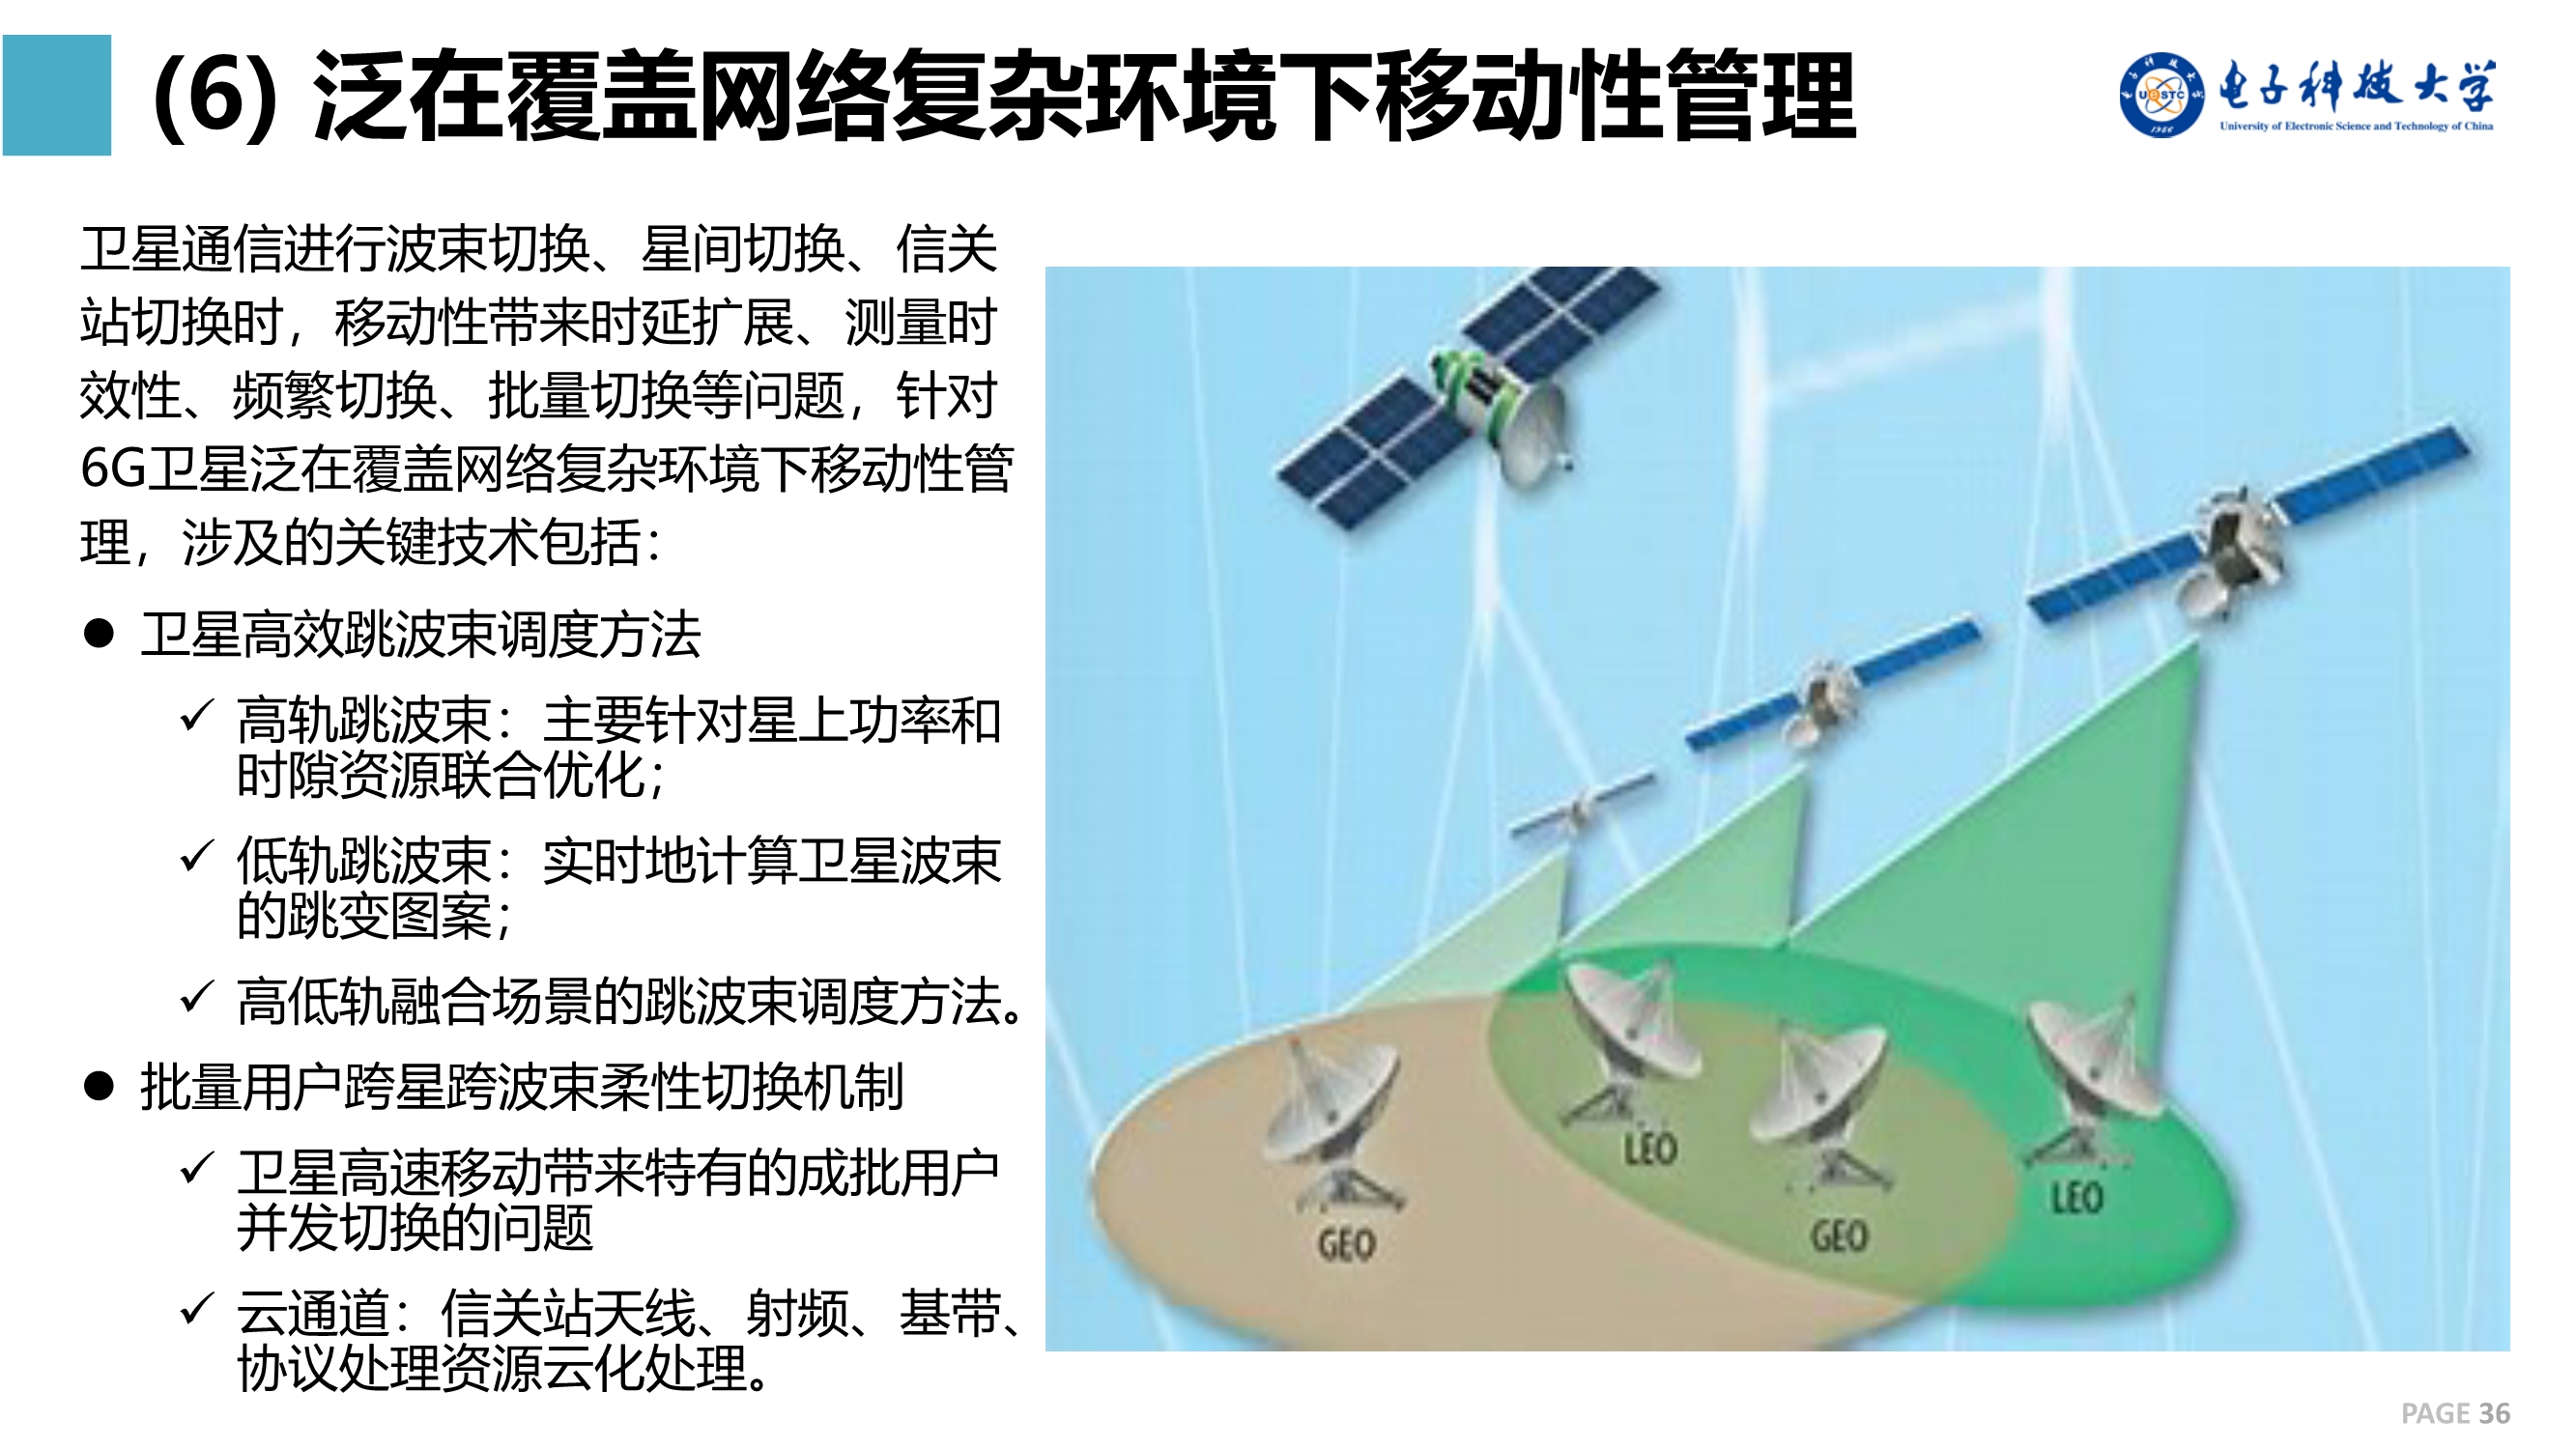 5G 卫星：中国大力推进的高速网络技术，改变生活方式  第8张